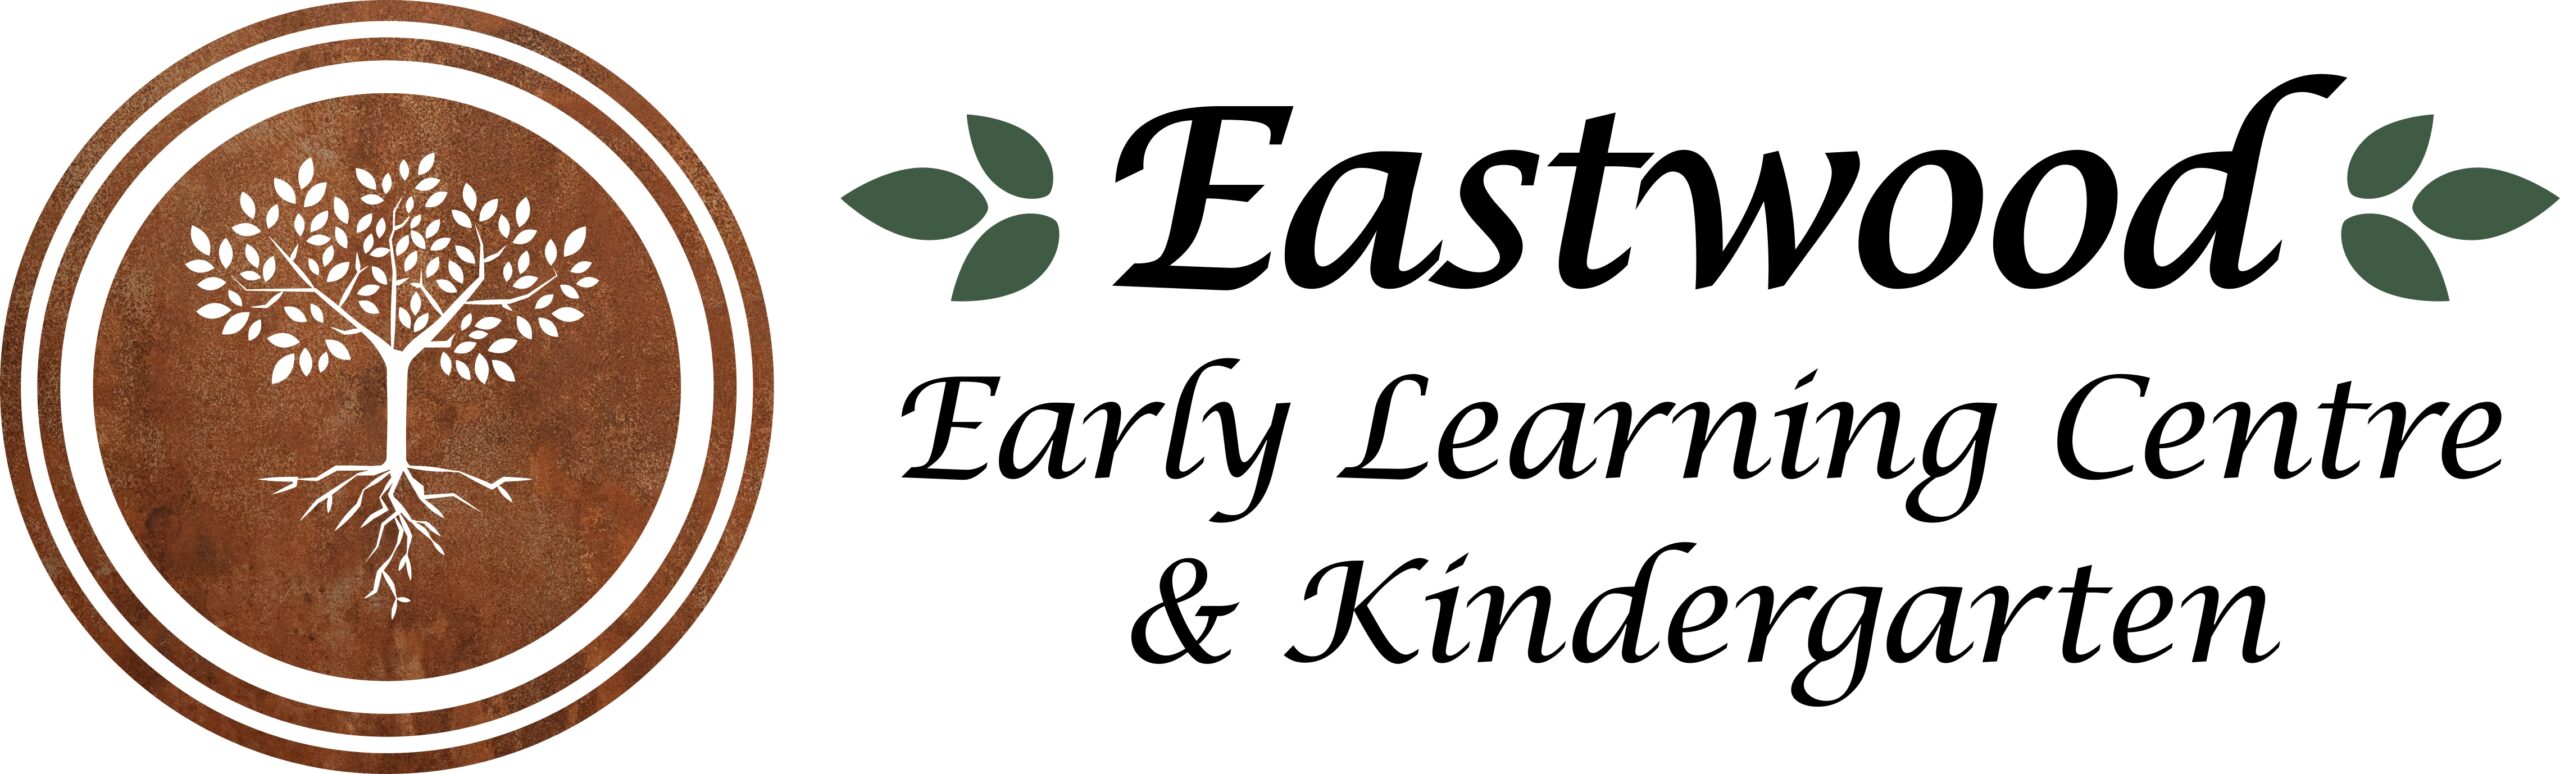 Eastwood Early Learning Centre & Kindergarten